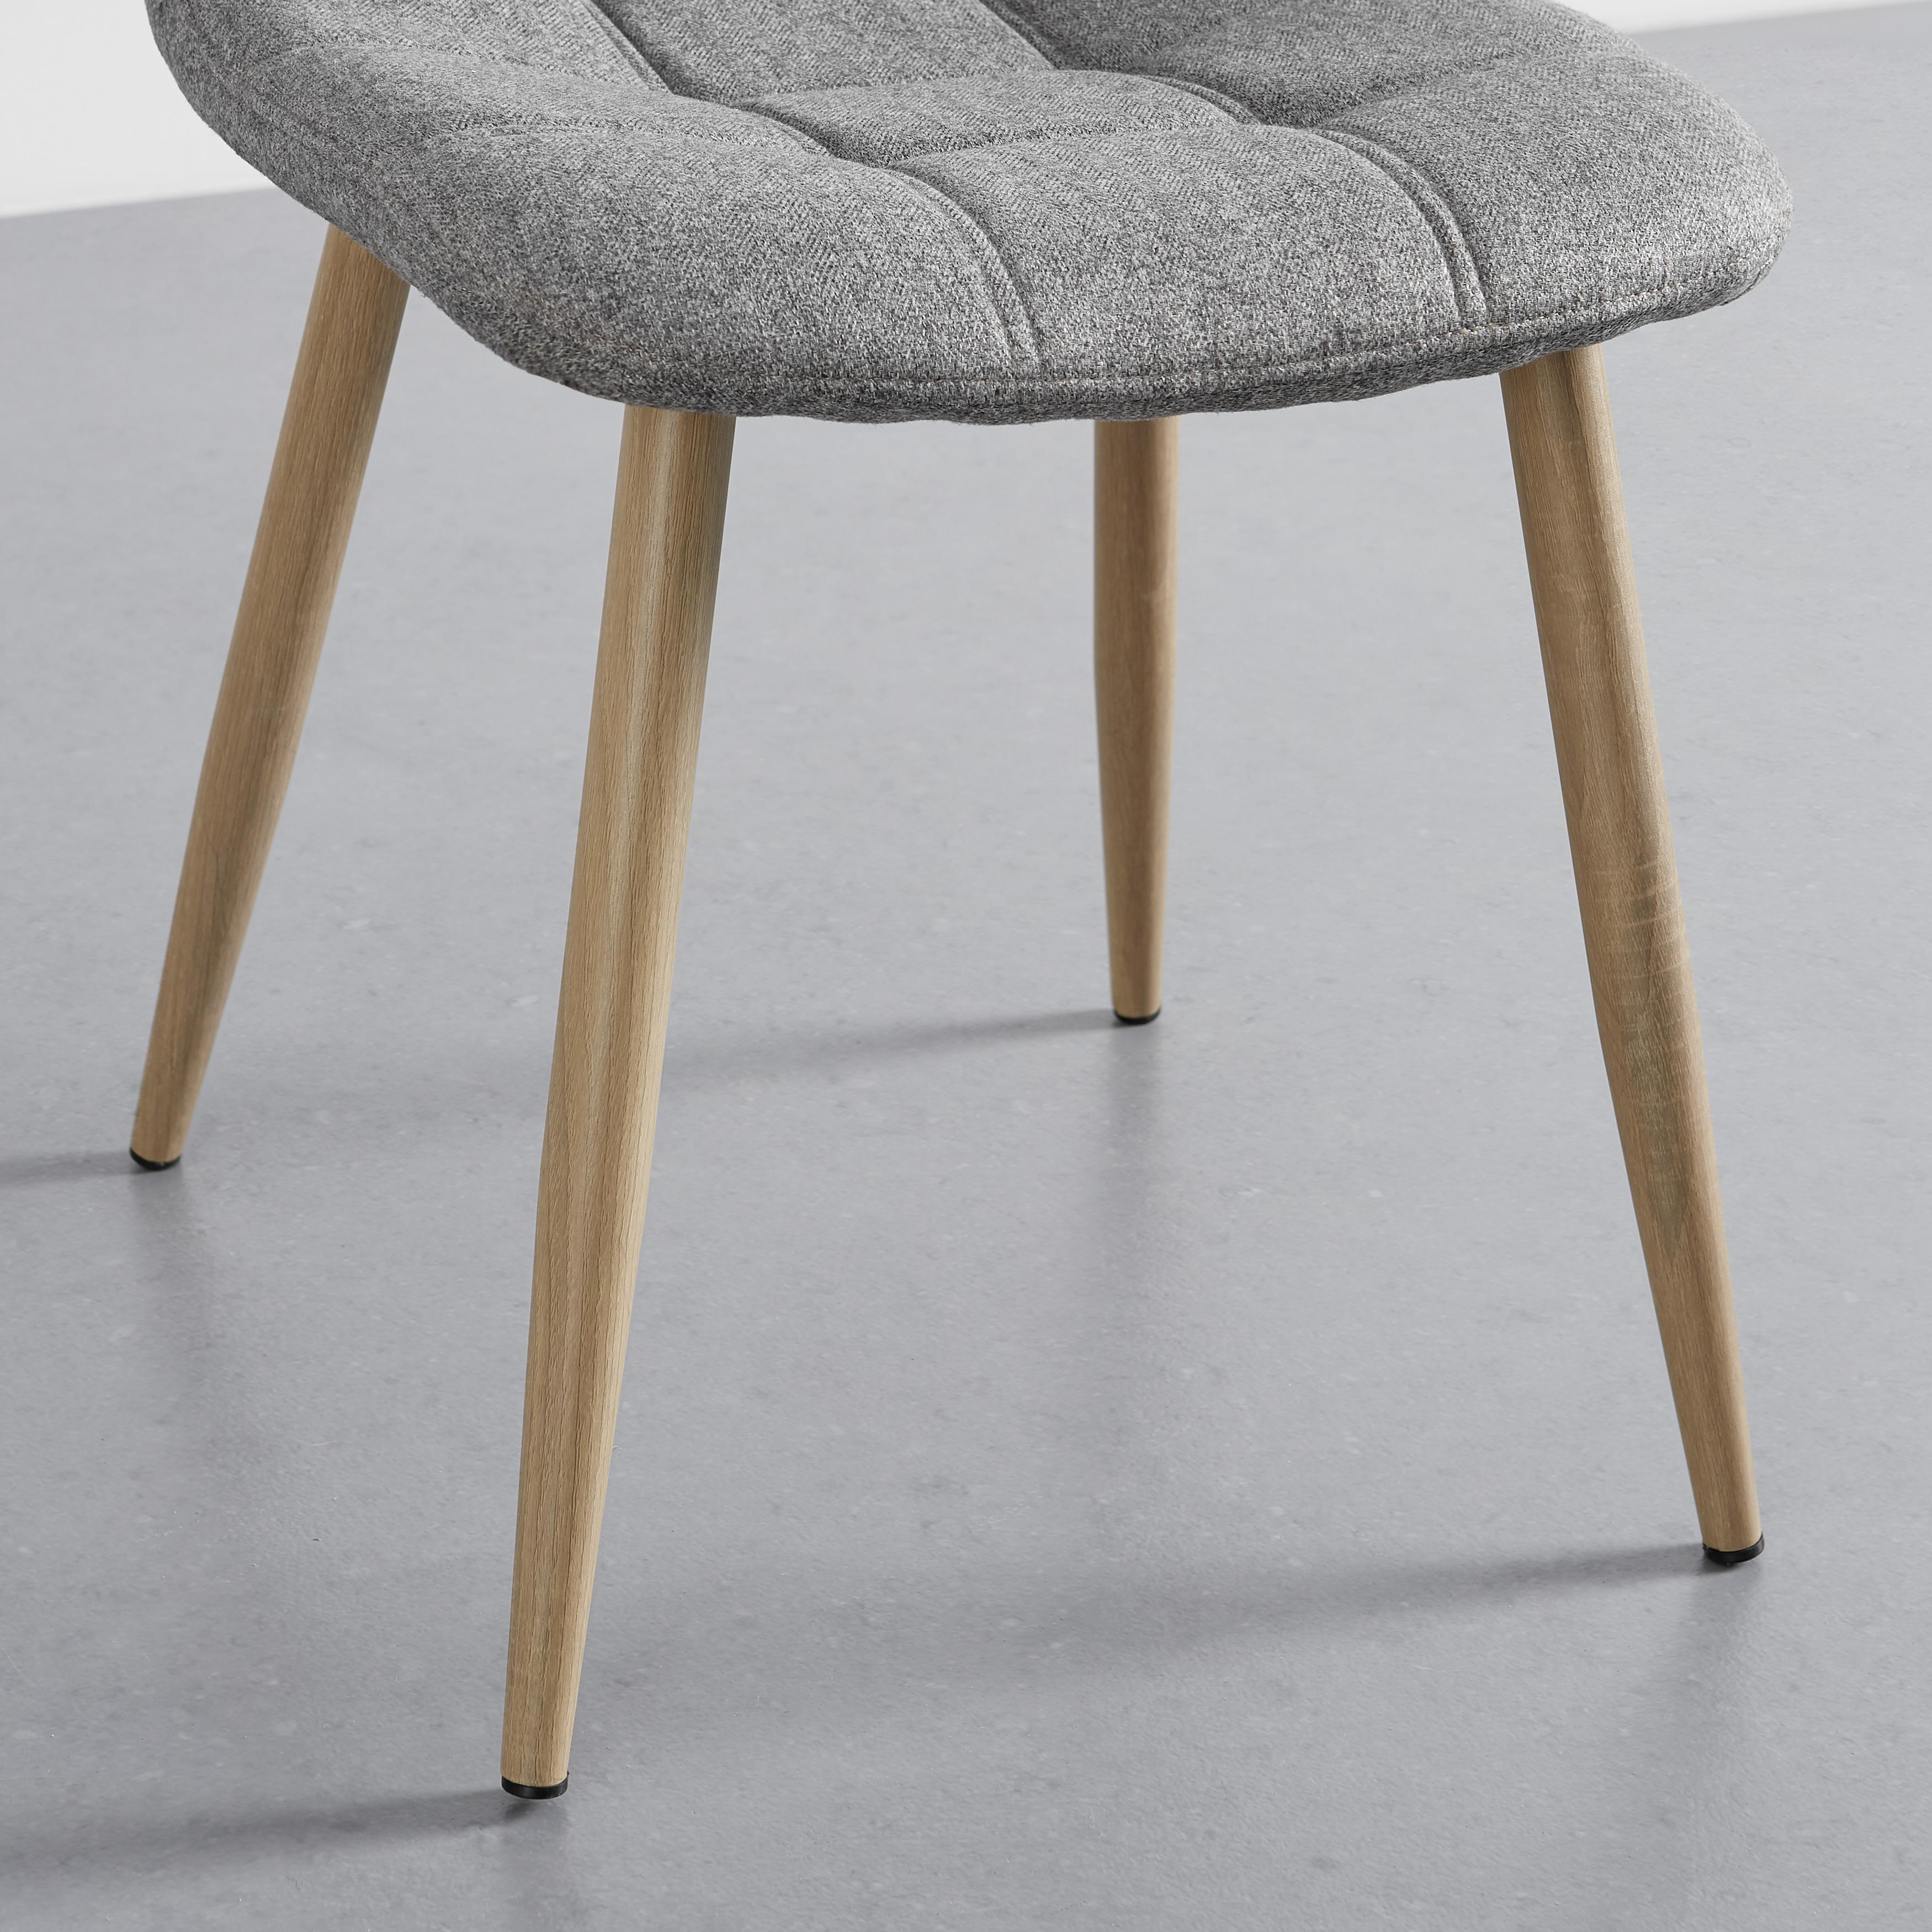 Stuhl "Melia", Webstoff, grau, Gepolstert - Eichefarben/Grau, MODERN, Textil/Metall (45/85/55cm) - Bessagi Home